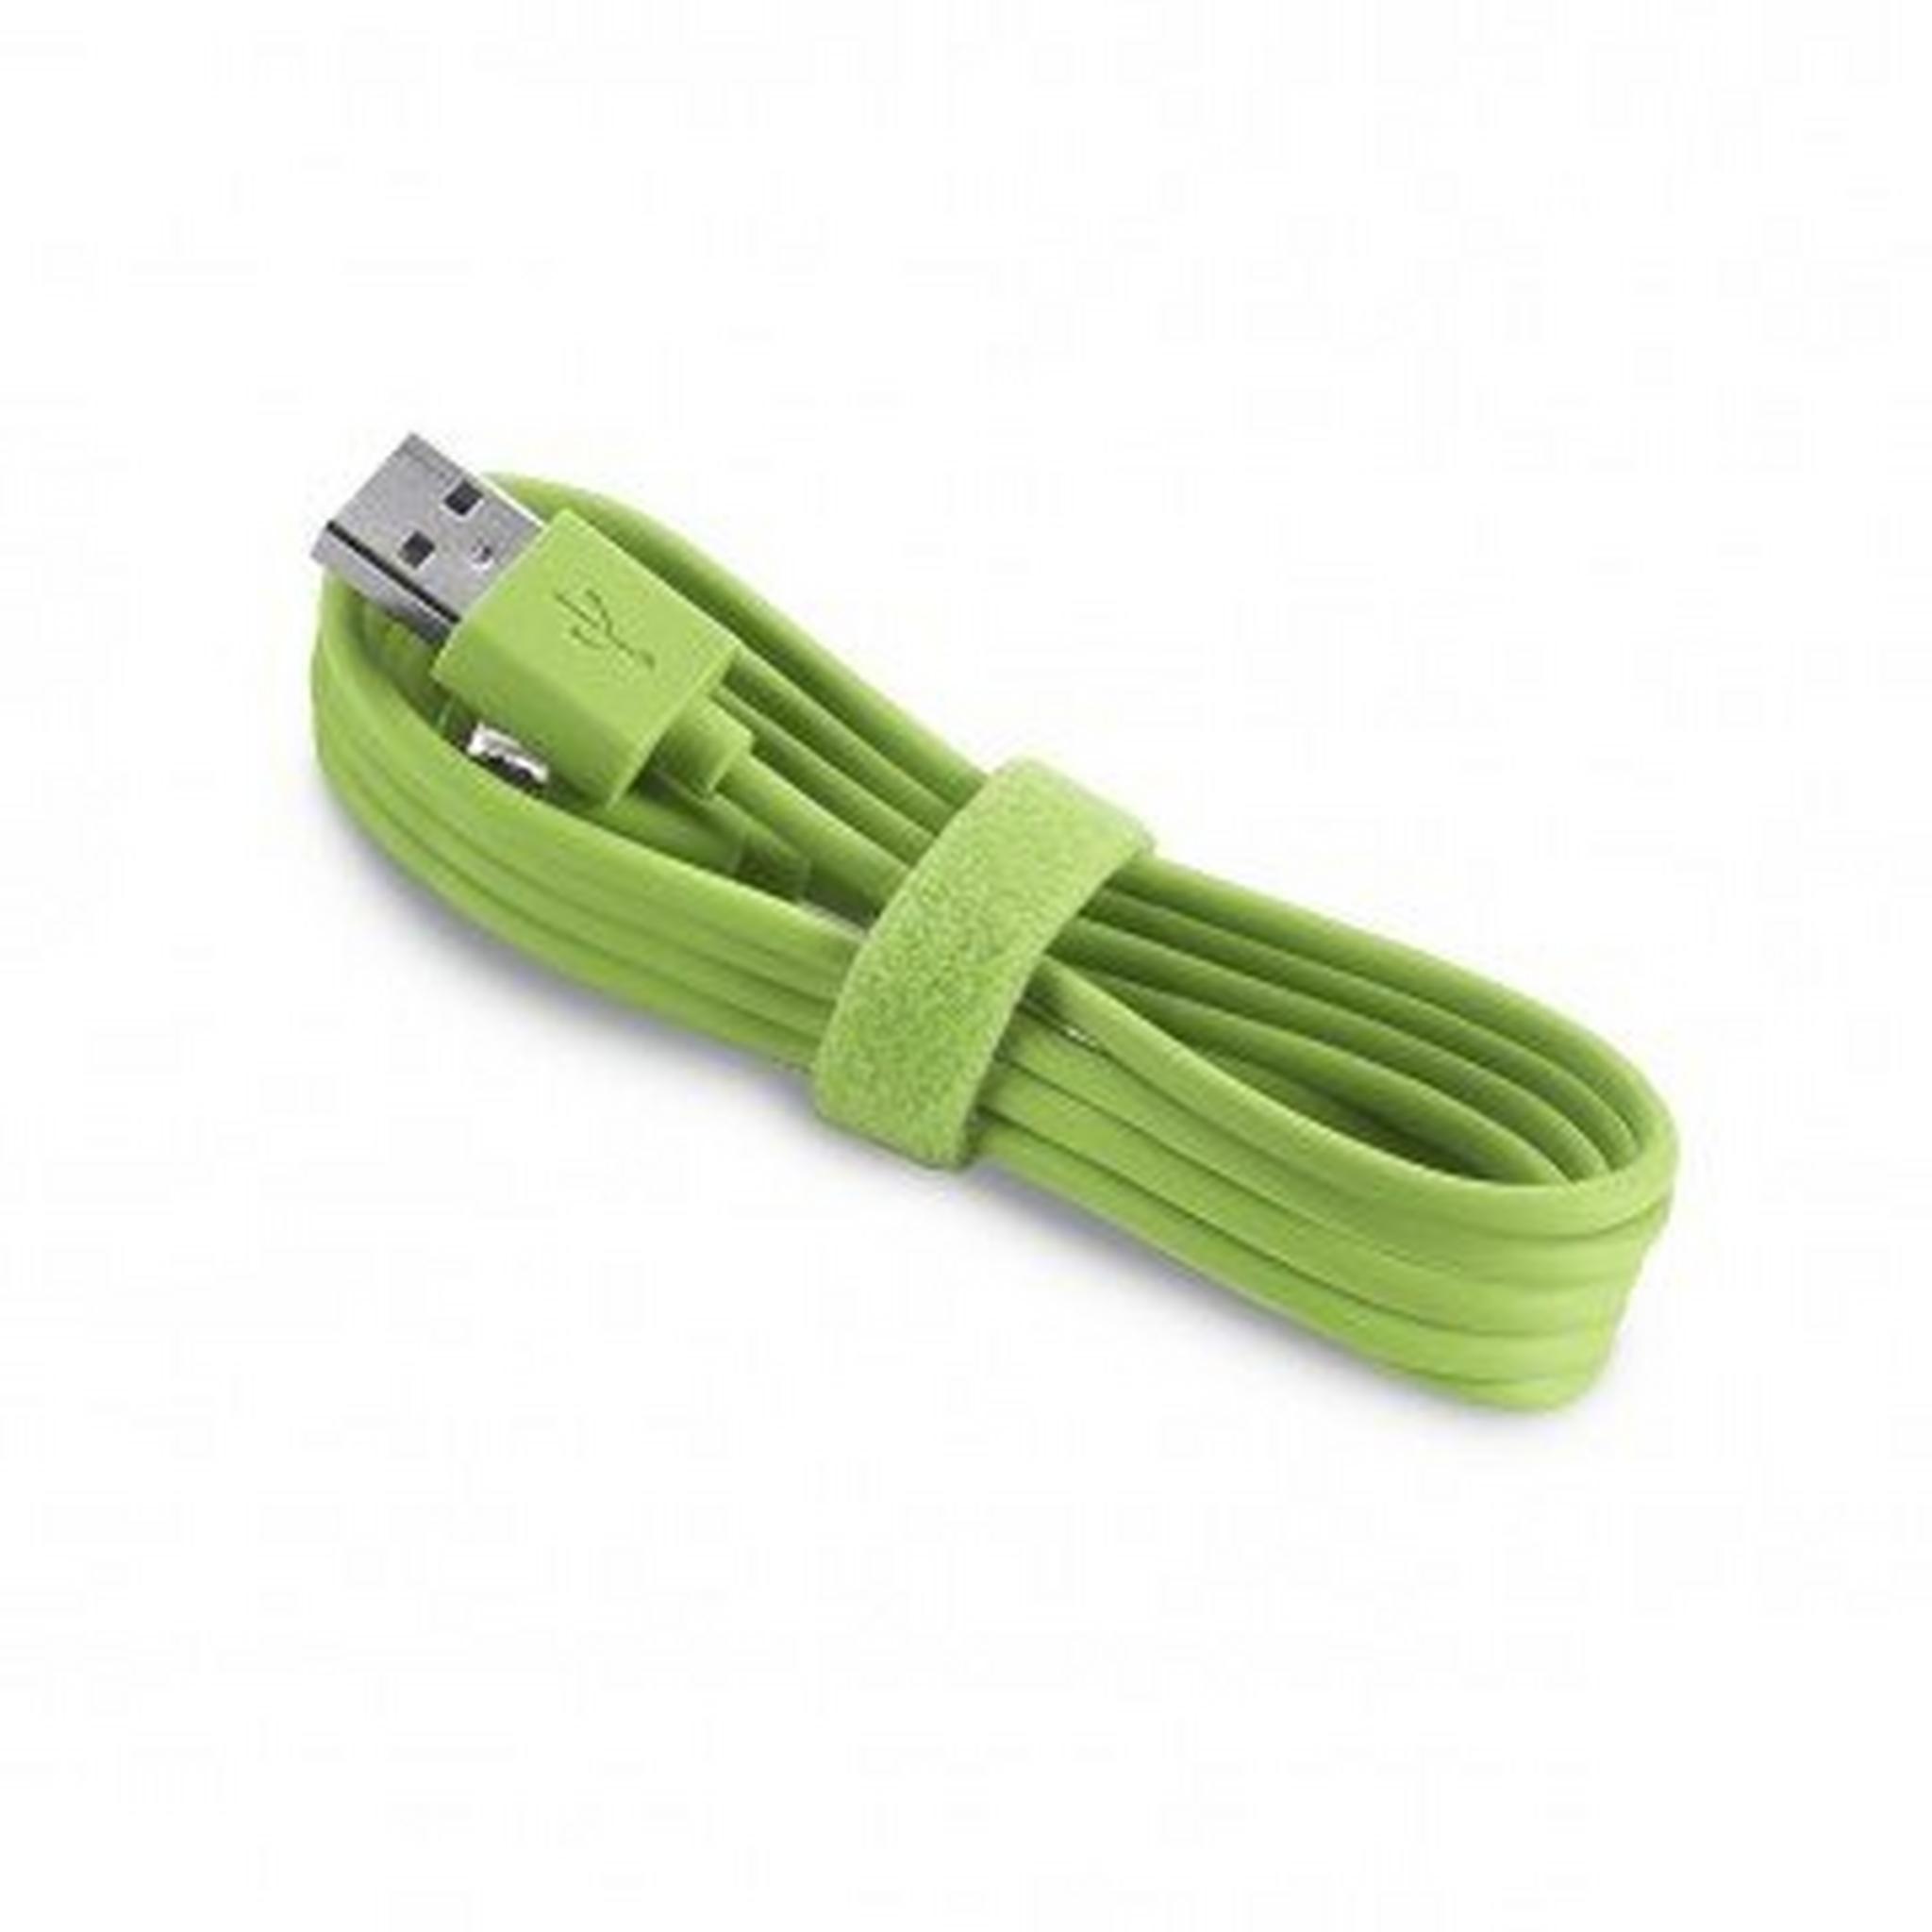 AiiNo Micro USB to USB 2.0 Cable - Green